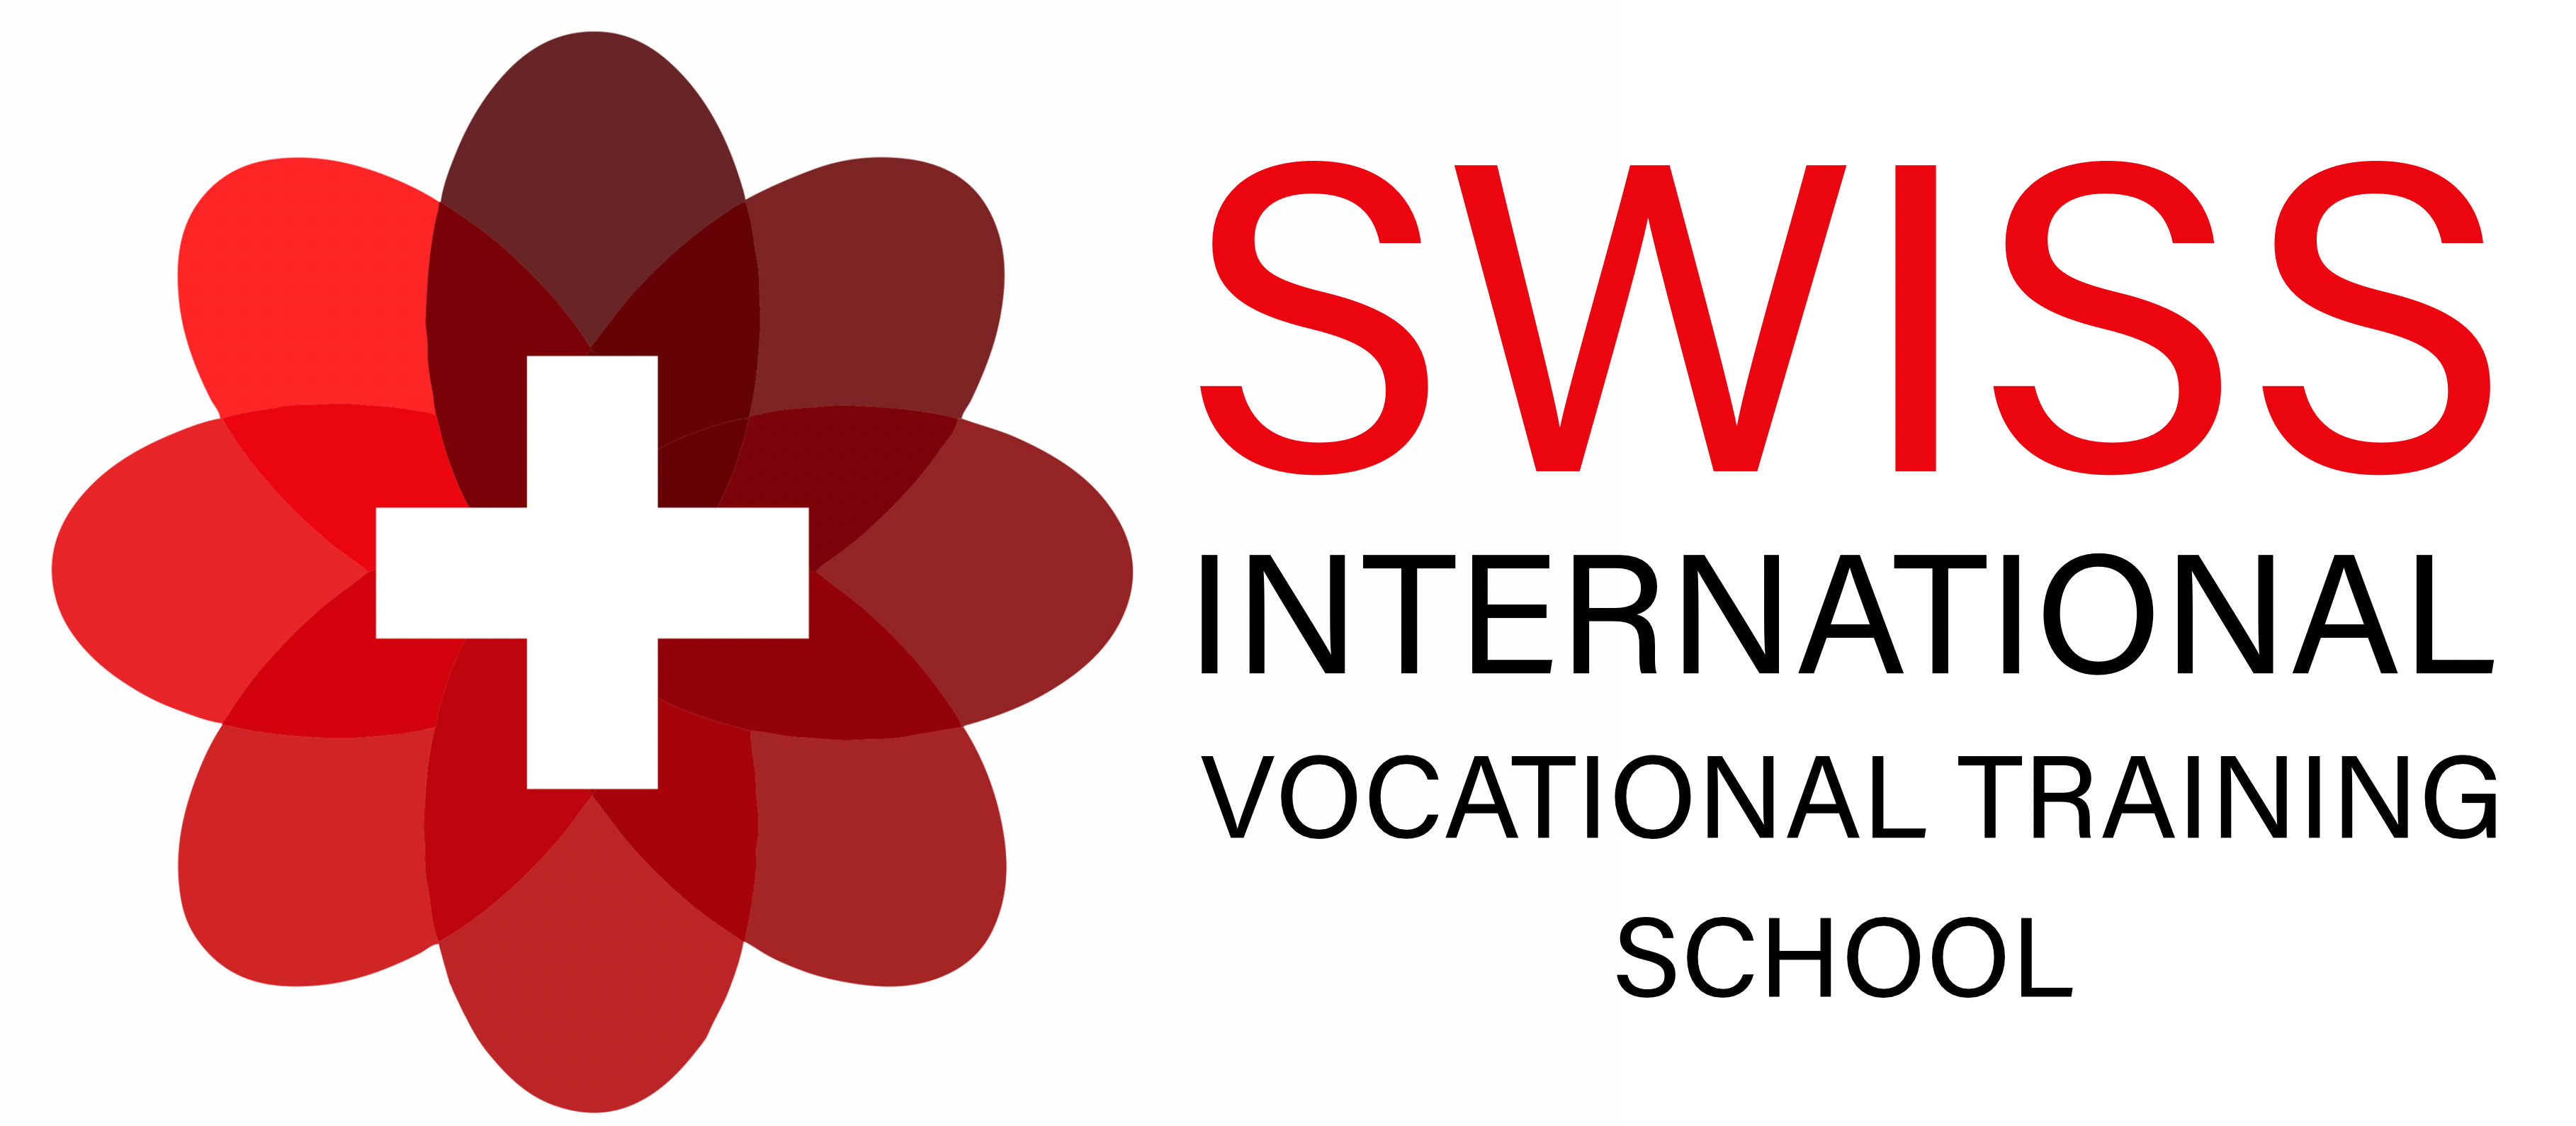 Swiss International Vocational Training